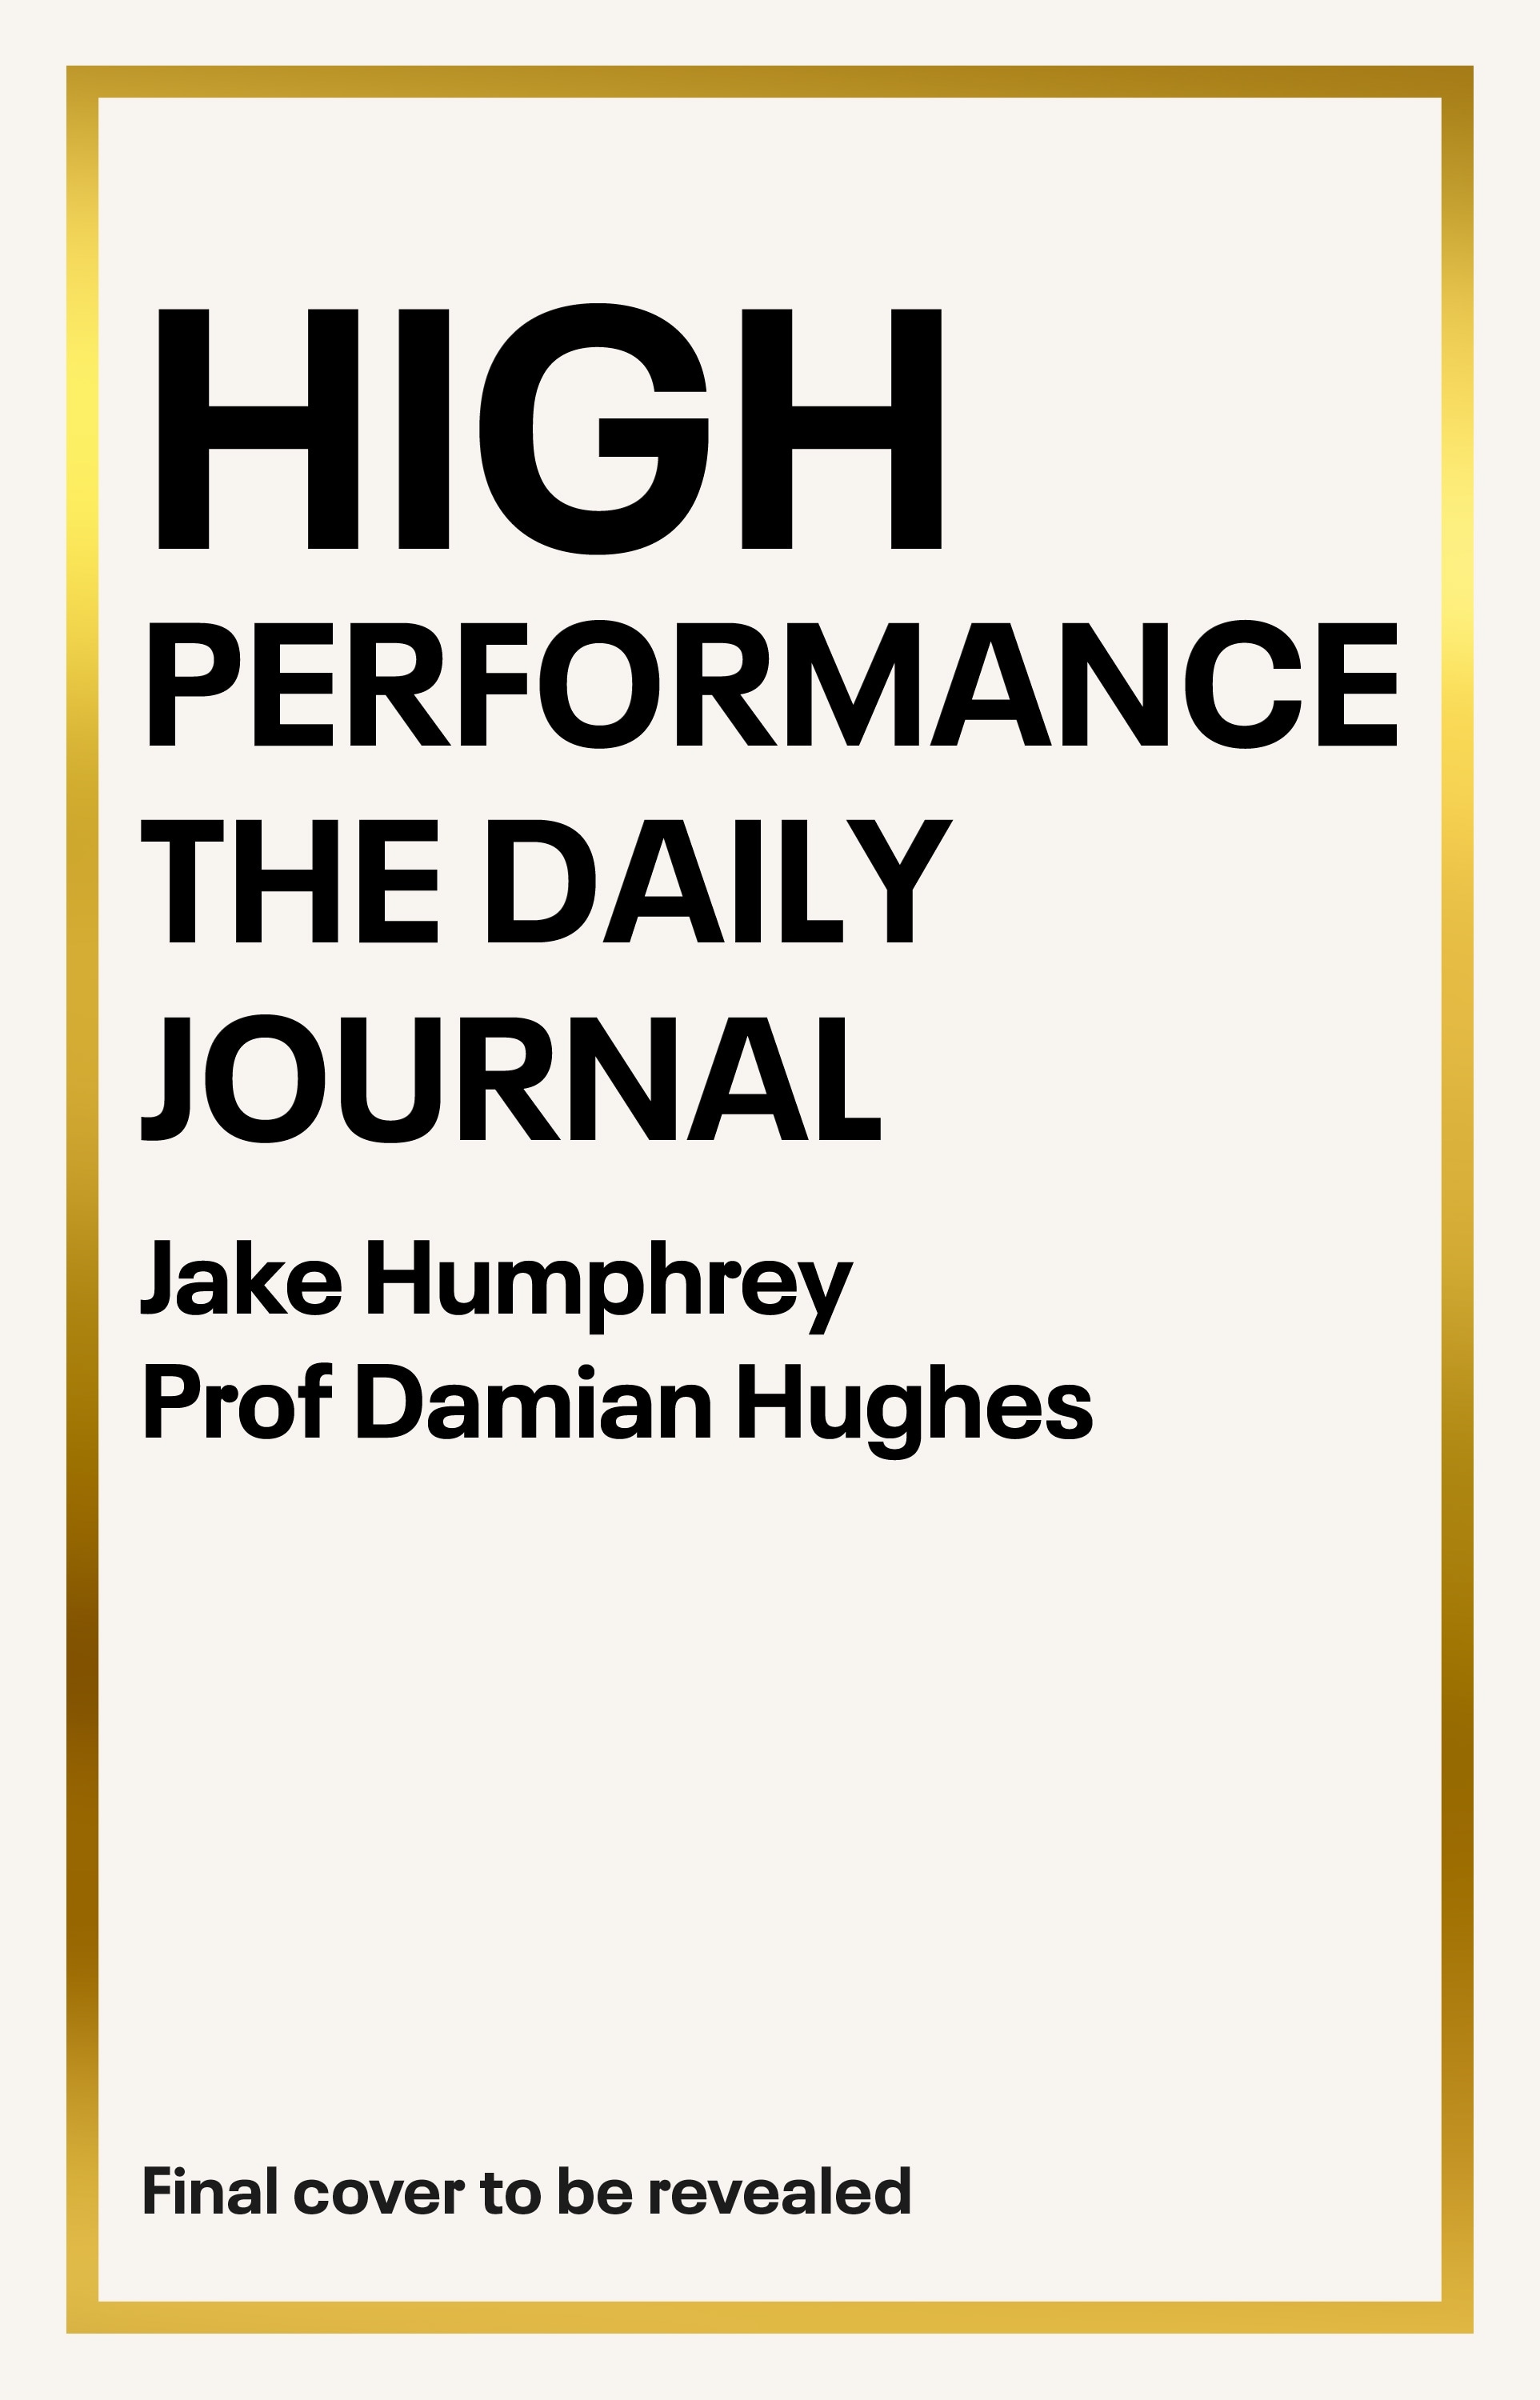 Book “High Performance: The Daily Journal” by Jake Humphrey, Damian Hughes — November 3, 2022